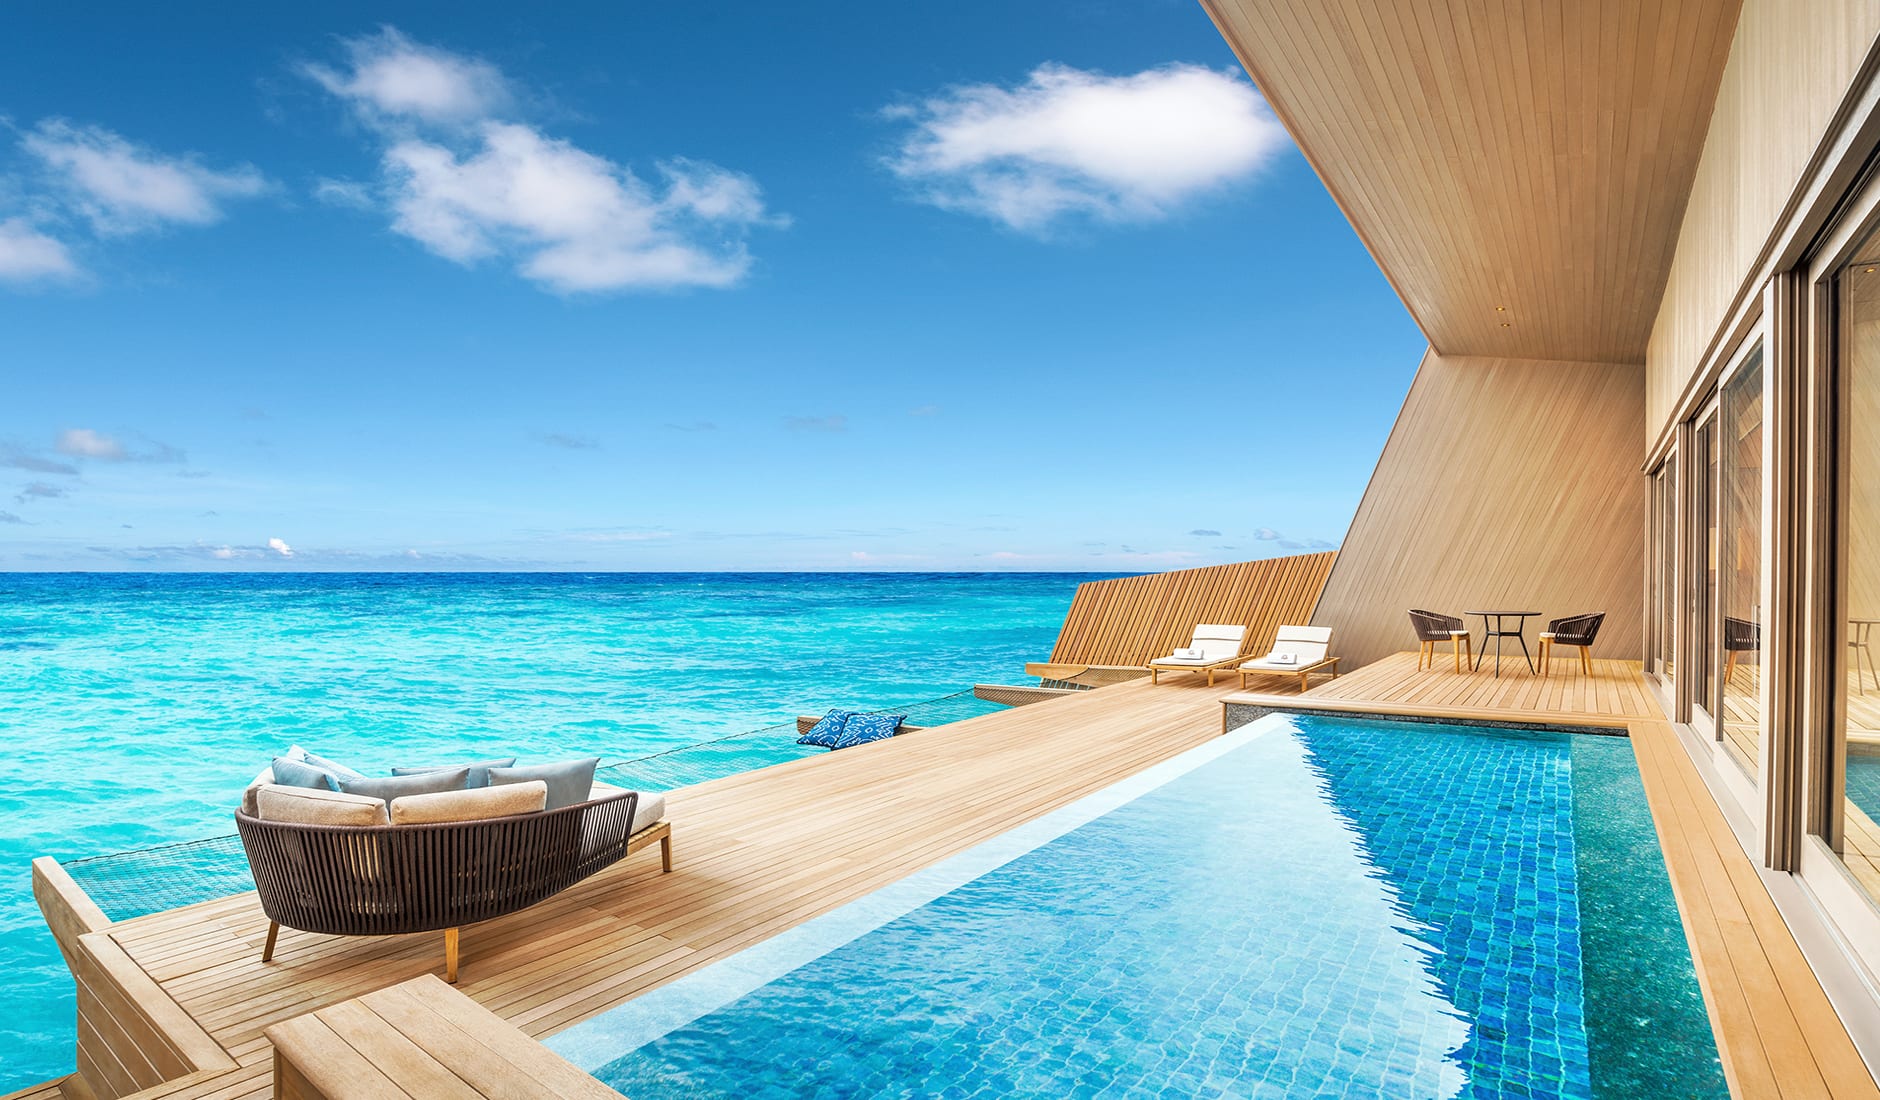 St. Regis Maldives Vommuli Resort, Dhaalu Atoll, Maldives. The Best Luxury Resorts in the Maldives by TravelPlusStyle.com